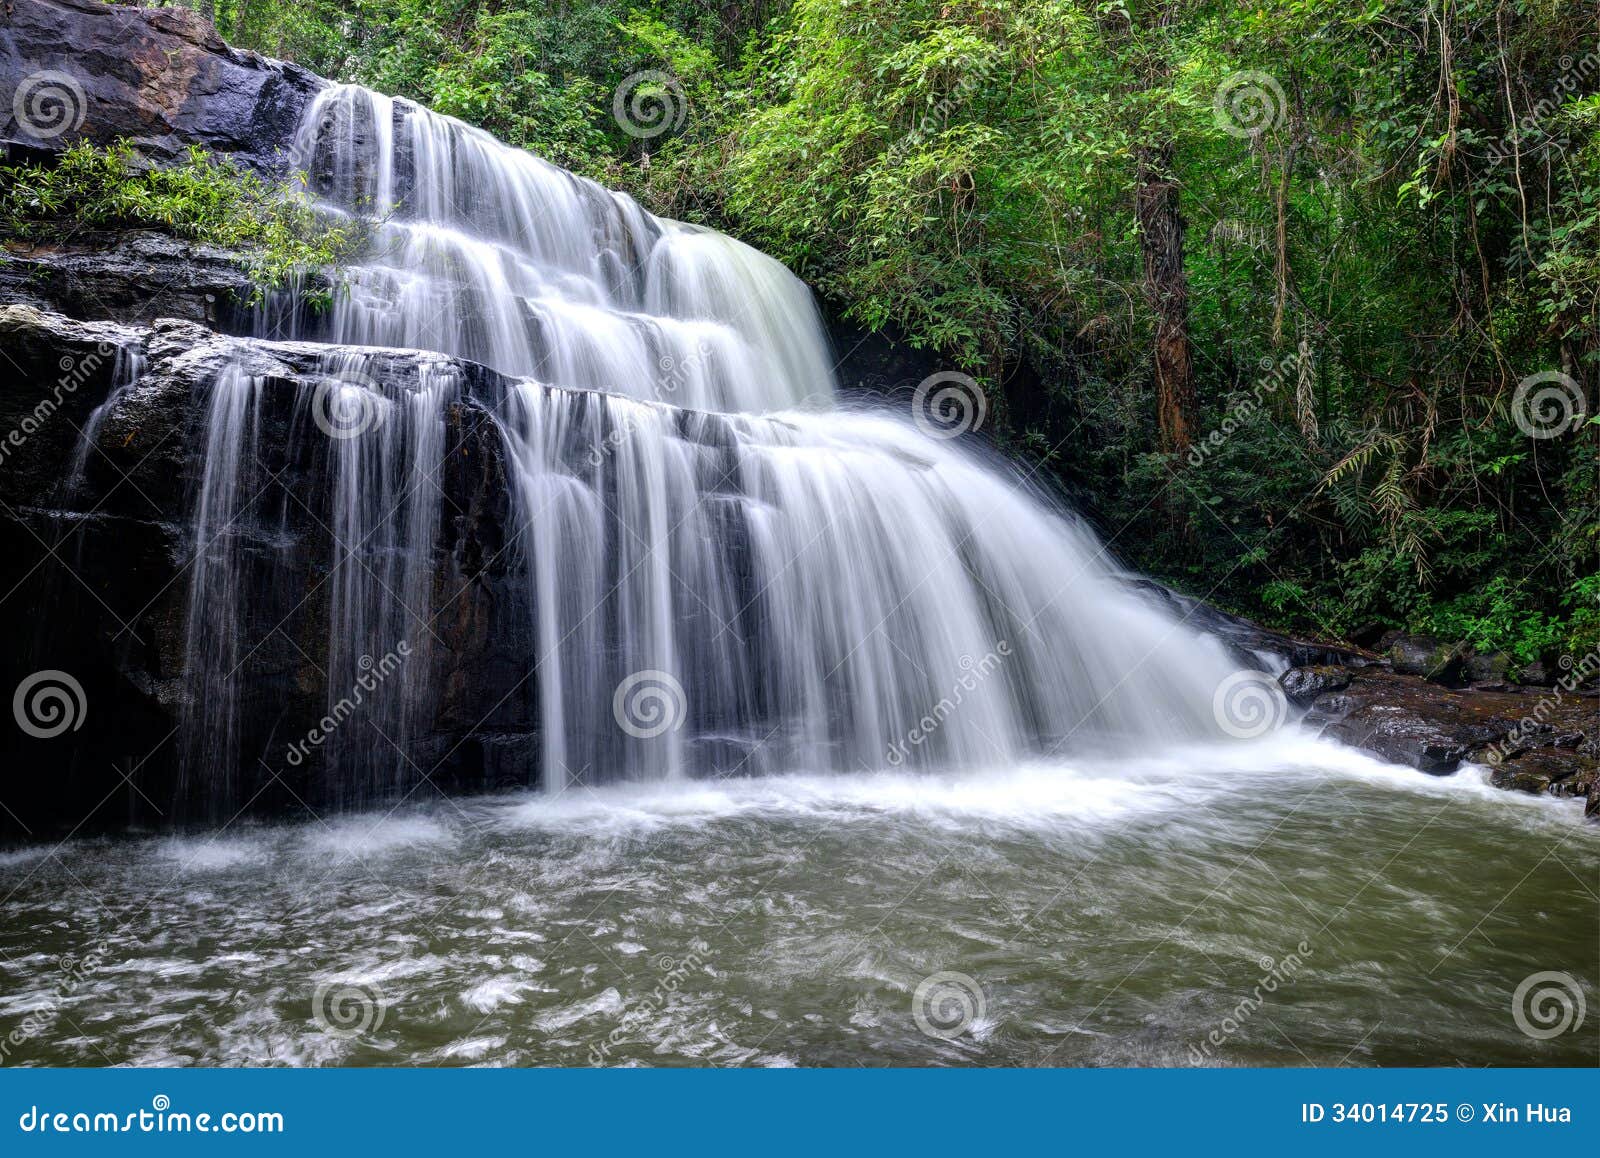 pang sida waterfall